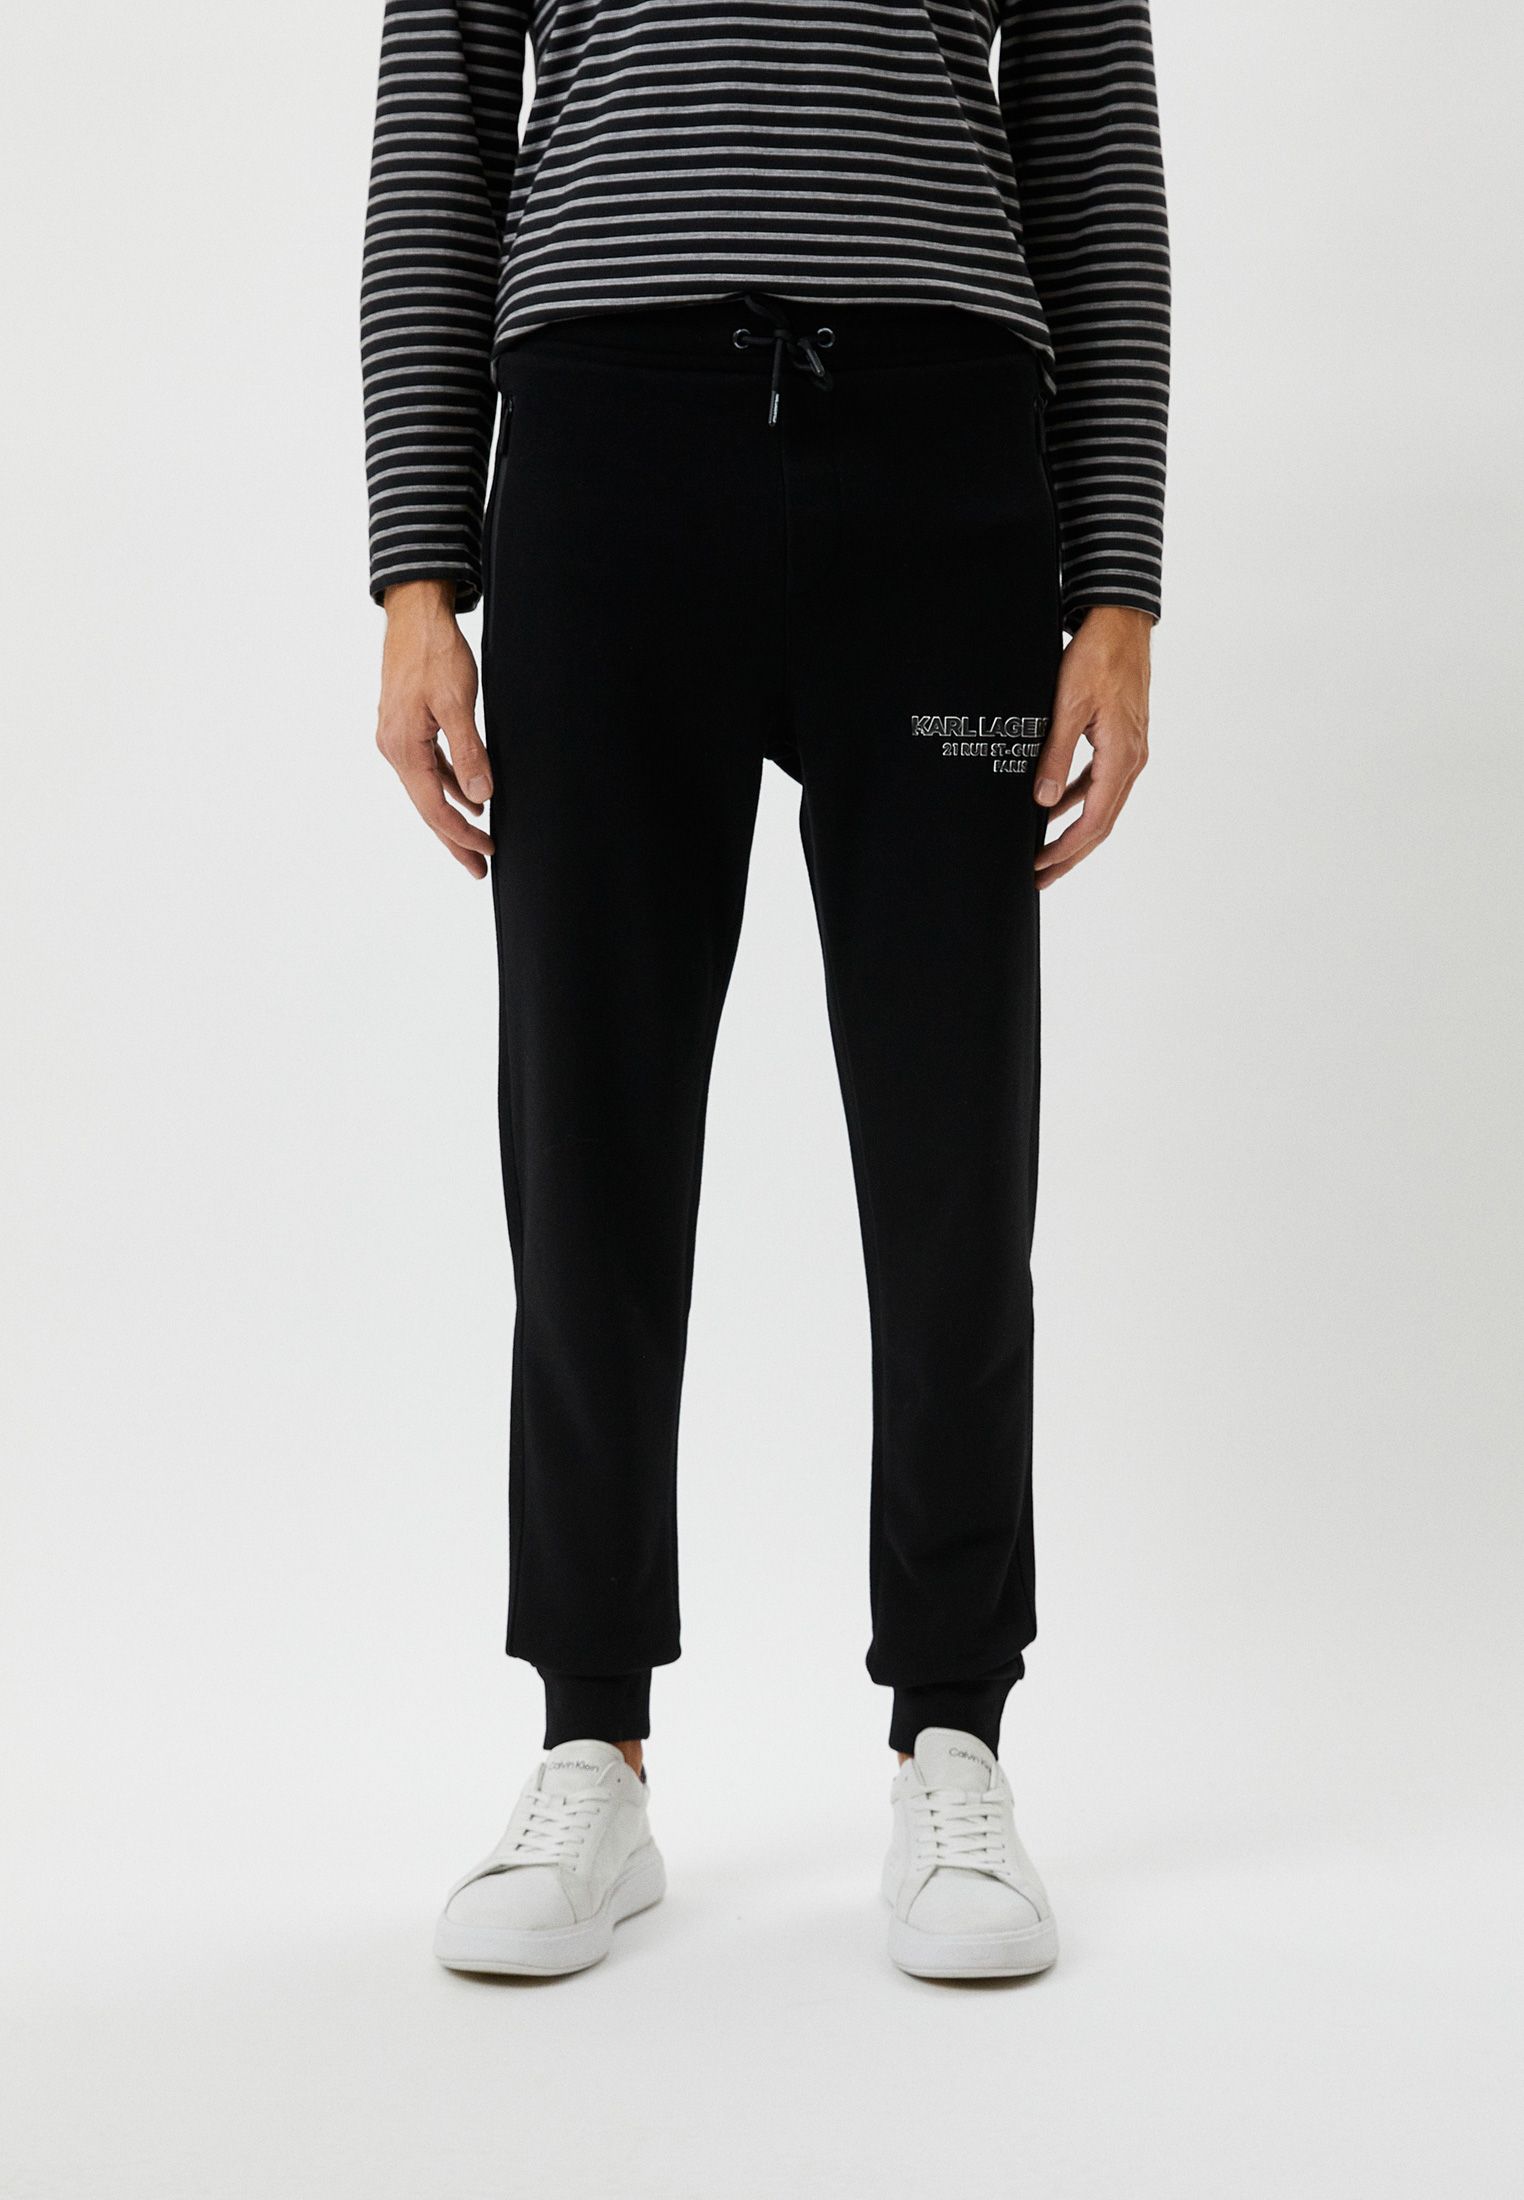 Мужские спортивные брюки Karl Lagerfeld (Карл Лагерфельд) 705011-524910